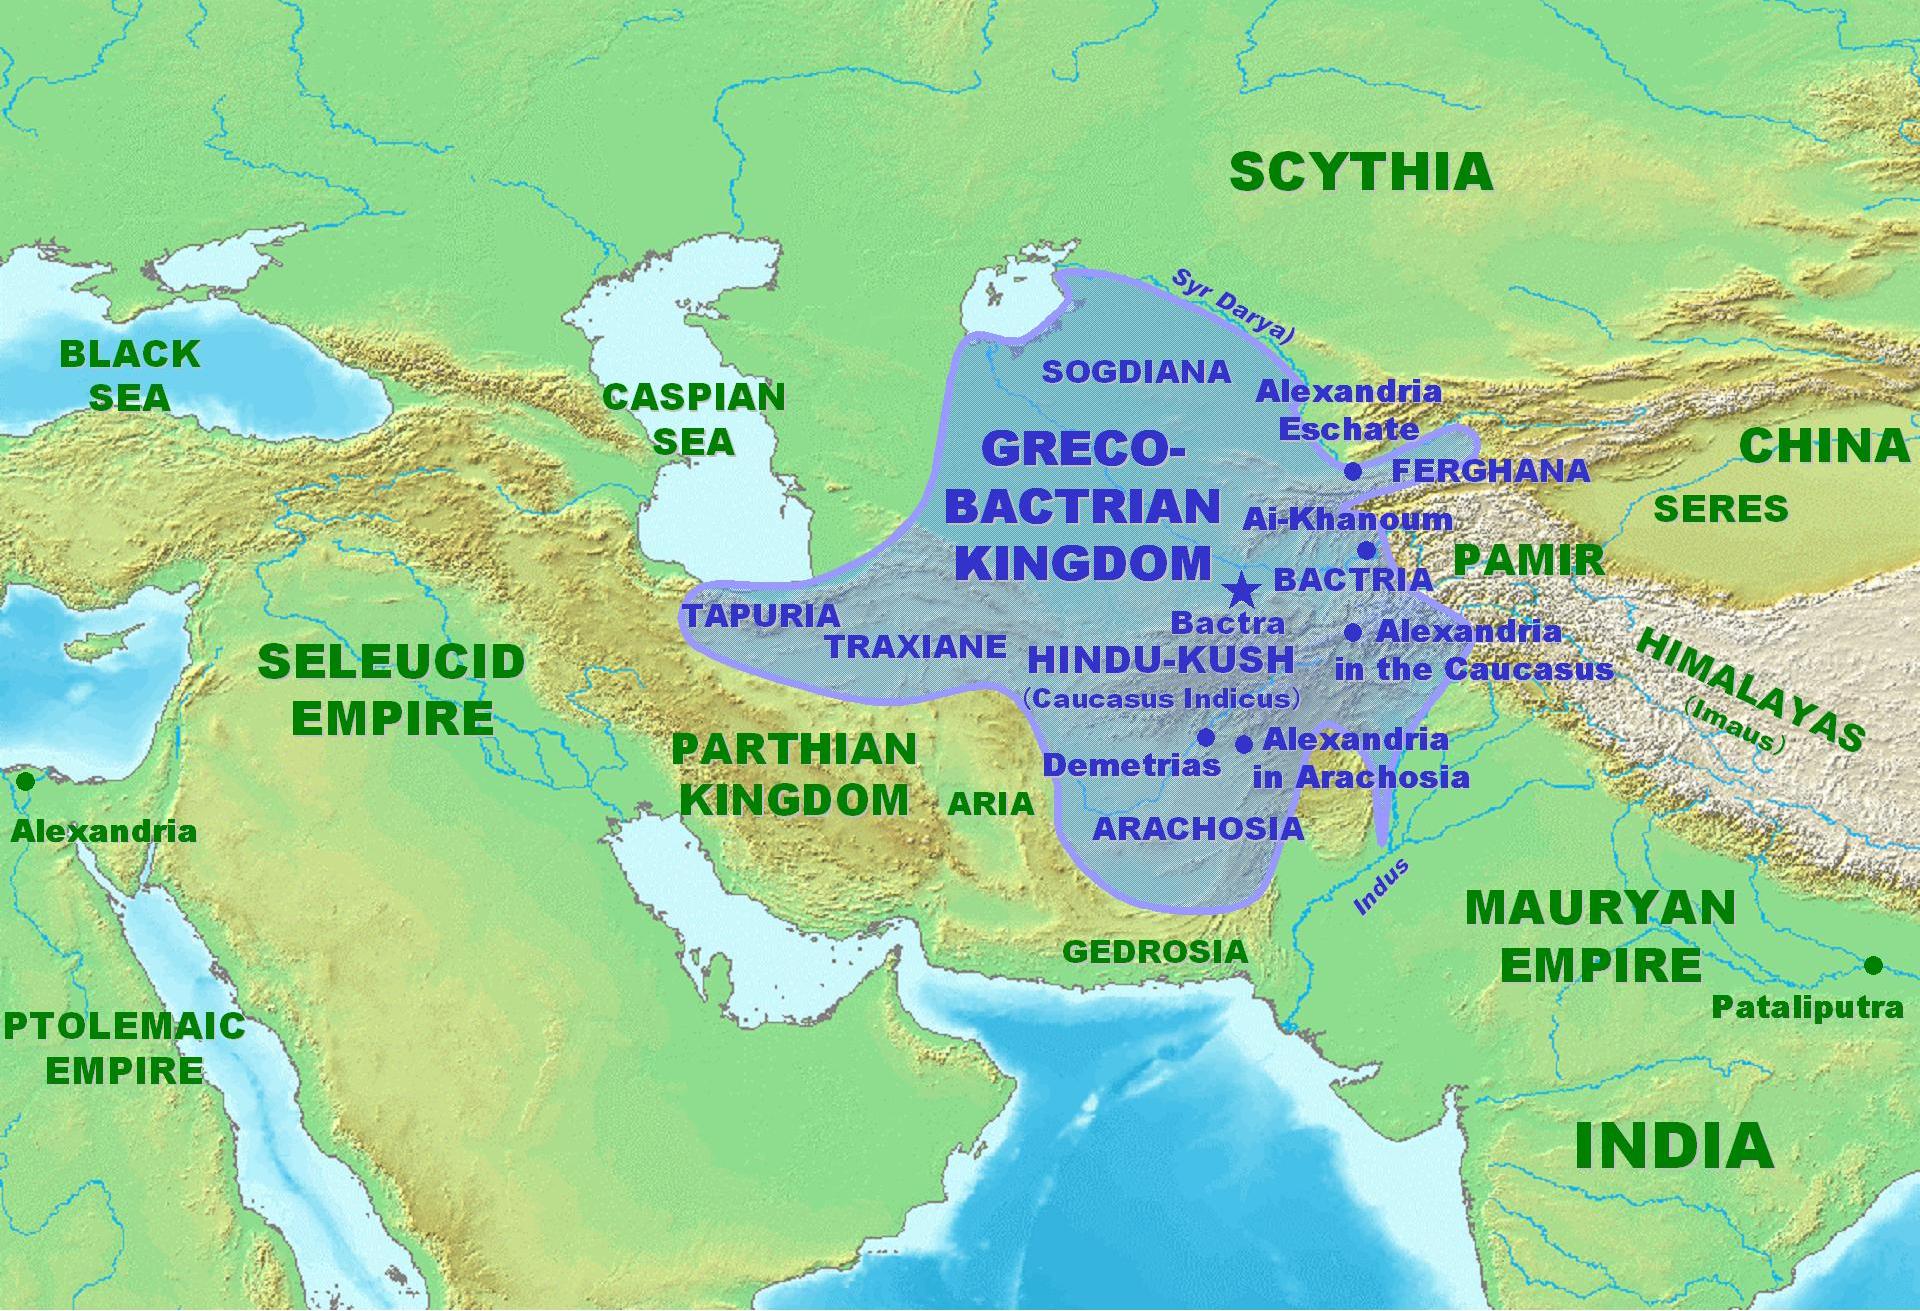 The Greco-Bactrian Kingdom